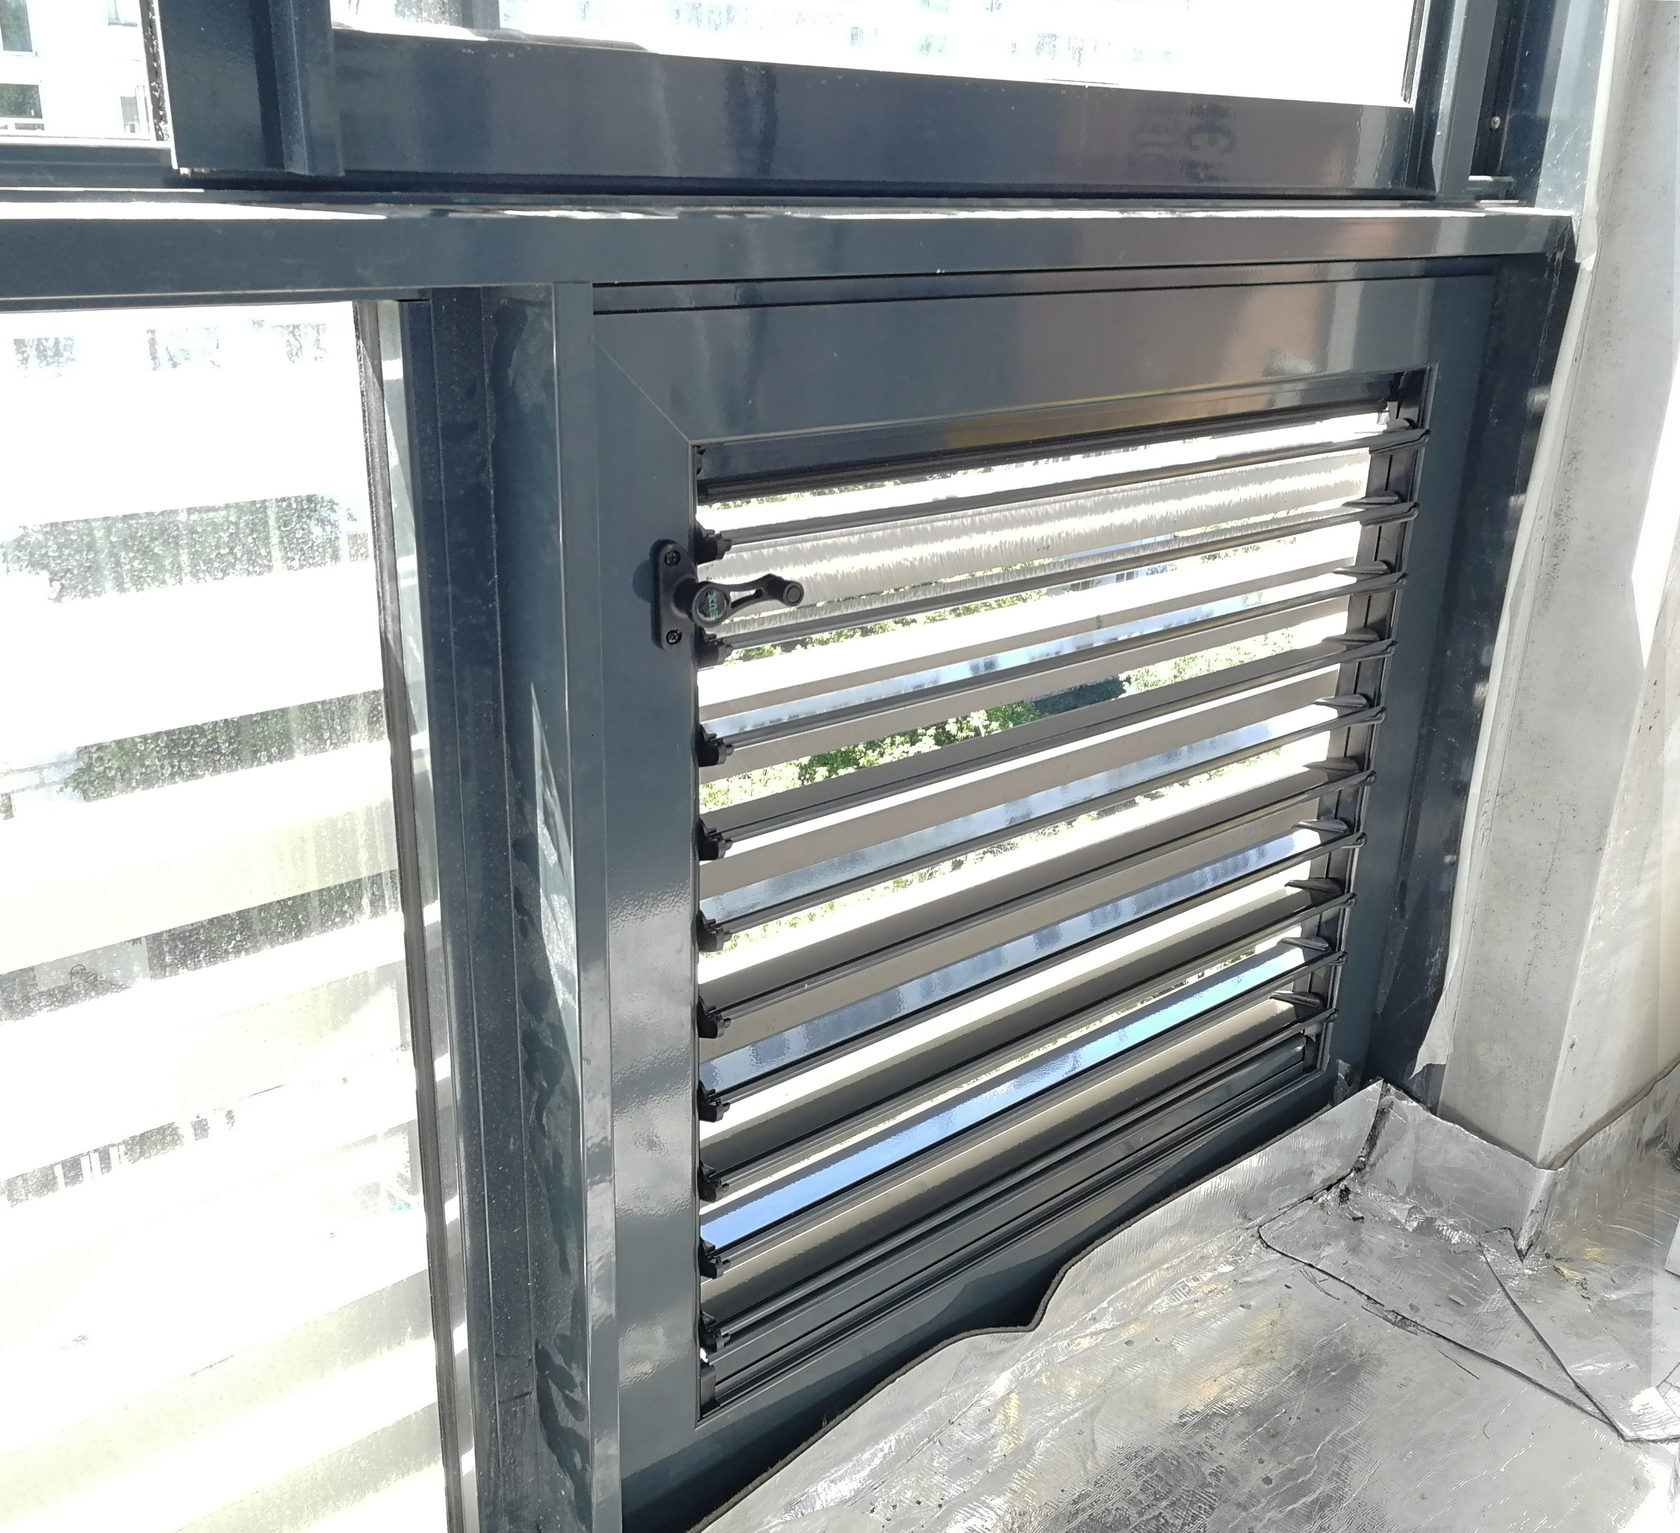 Вентиляционная решетка с закрытием на балконе. Установка вместо любого стеклопакета или решетки от застройщика. Обеспечение достаточного проветривания и вентиляции.